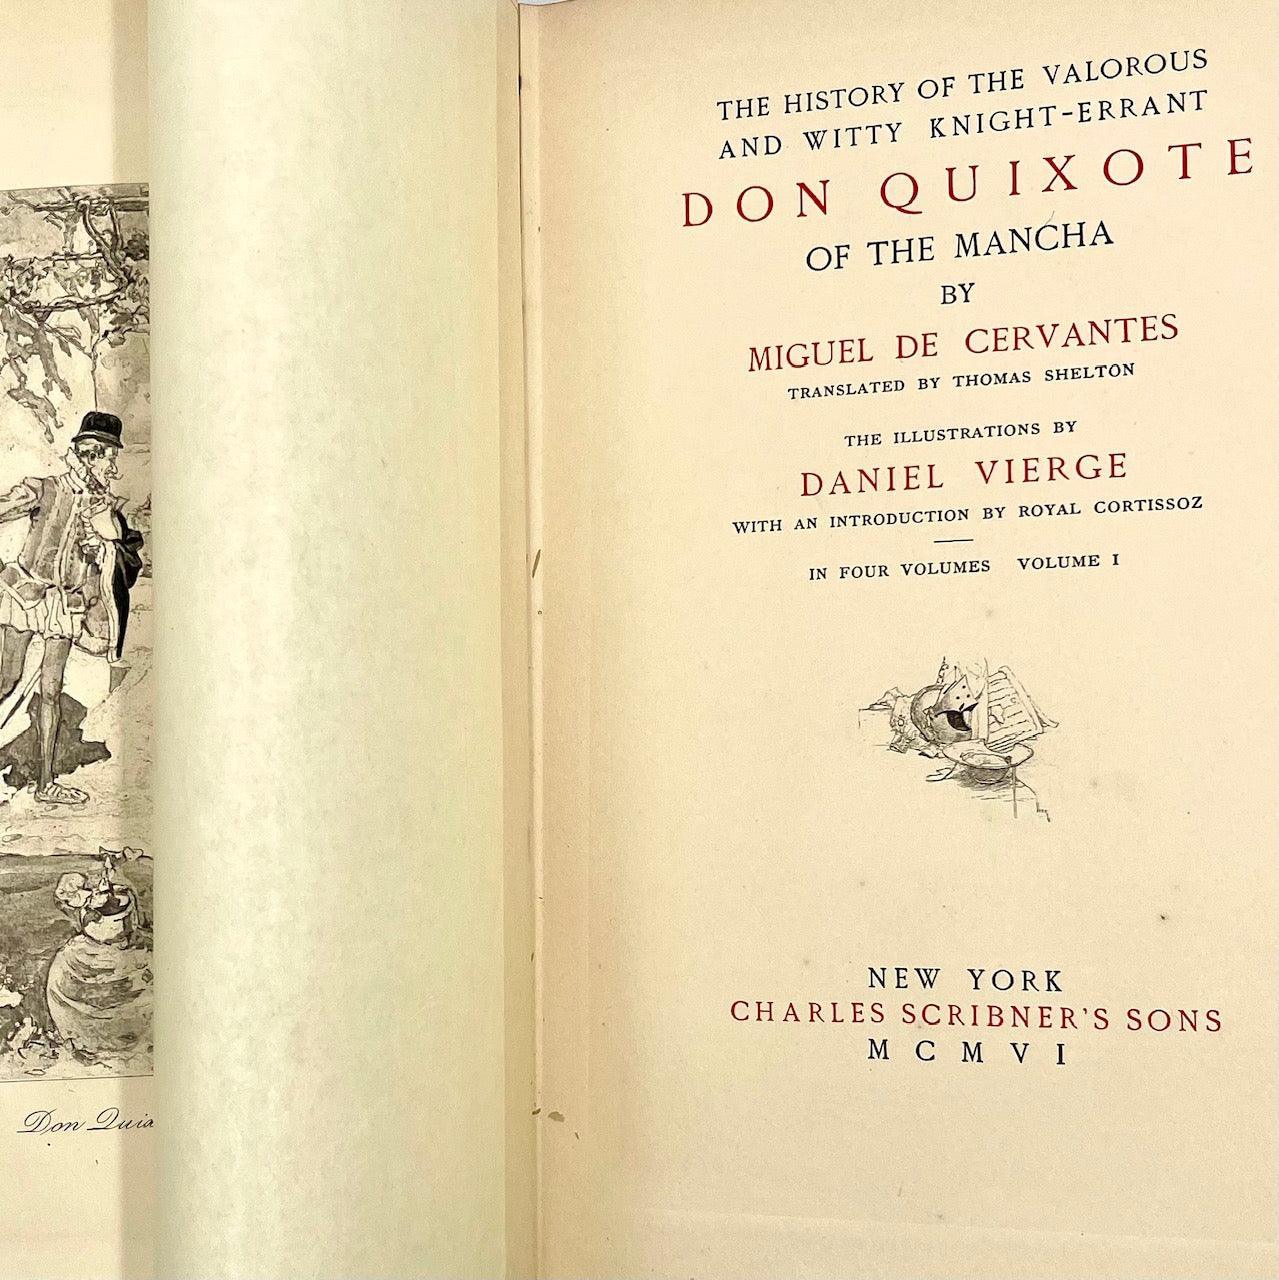 Don Quixote: The History of the Valorous and Witty Knight-Errant Don Quixote of La Mancha - Grinning Cat Books - LITERATURE - DON QUIXOTE, SPANISH LITERATURE